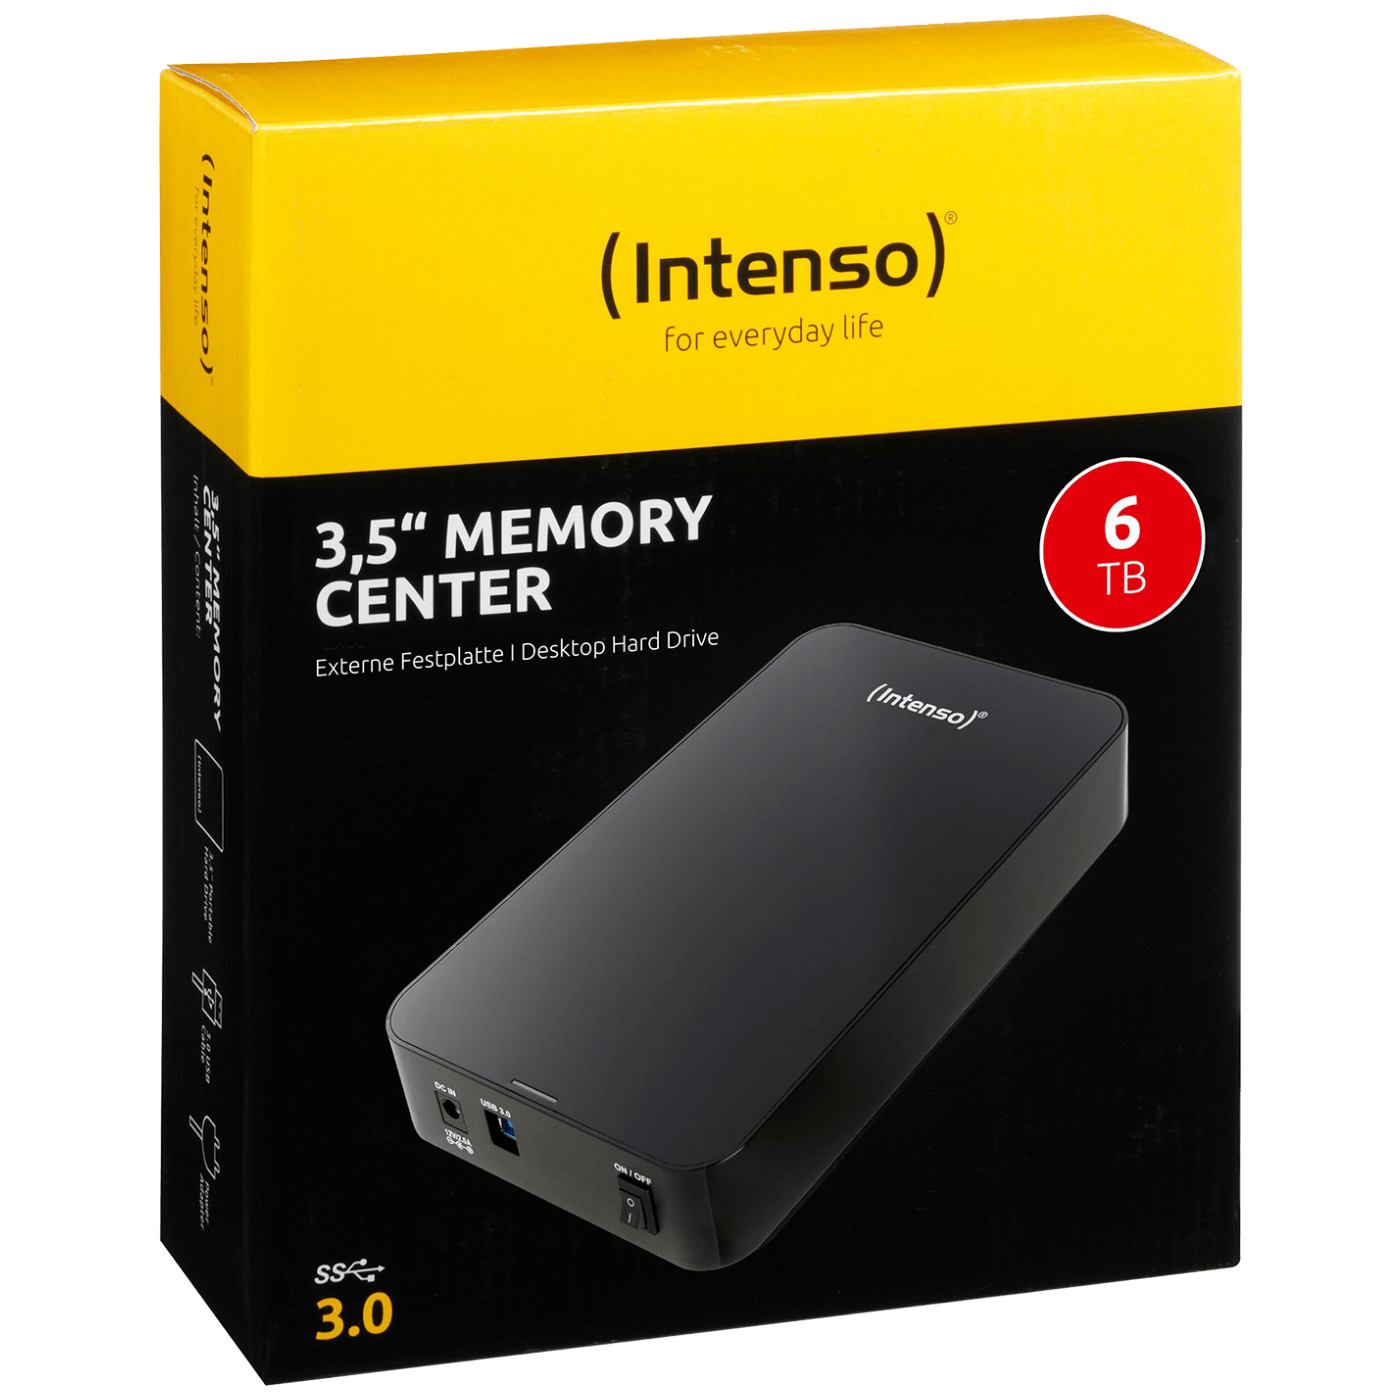 HDD3.0-6TB/Memory-center